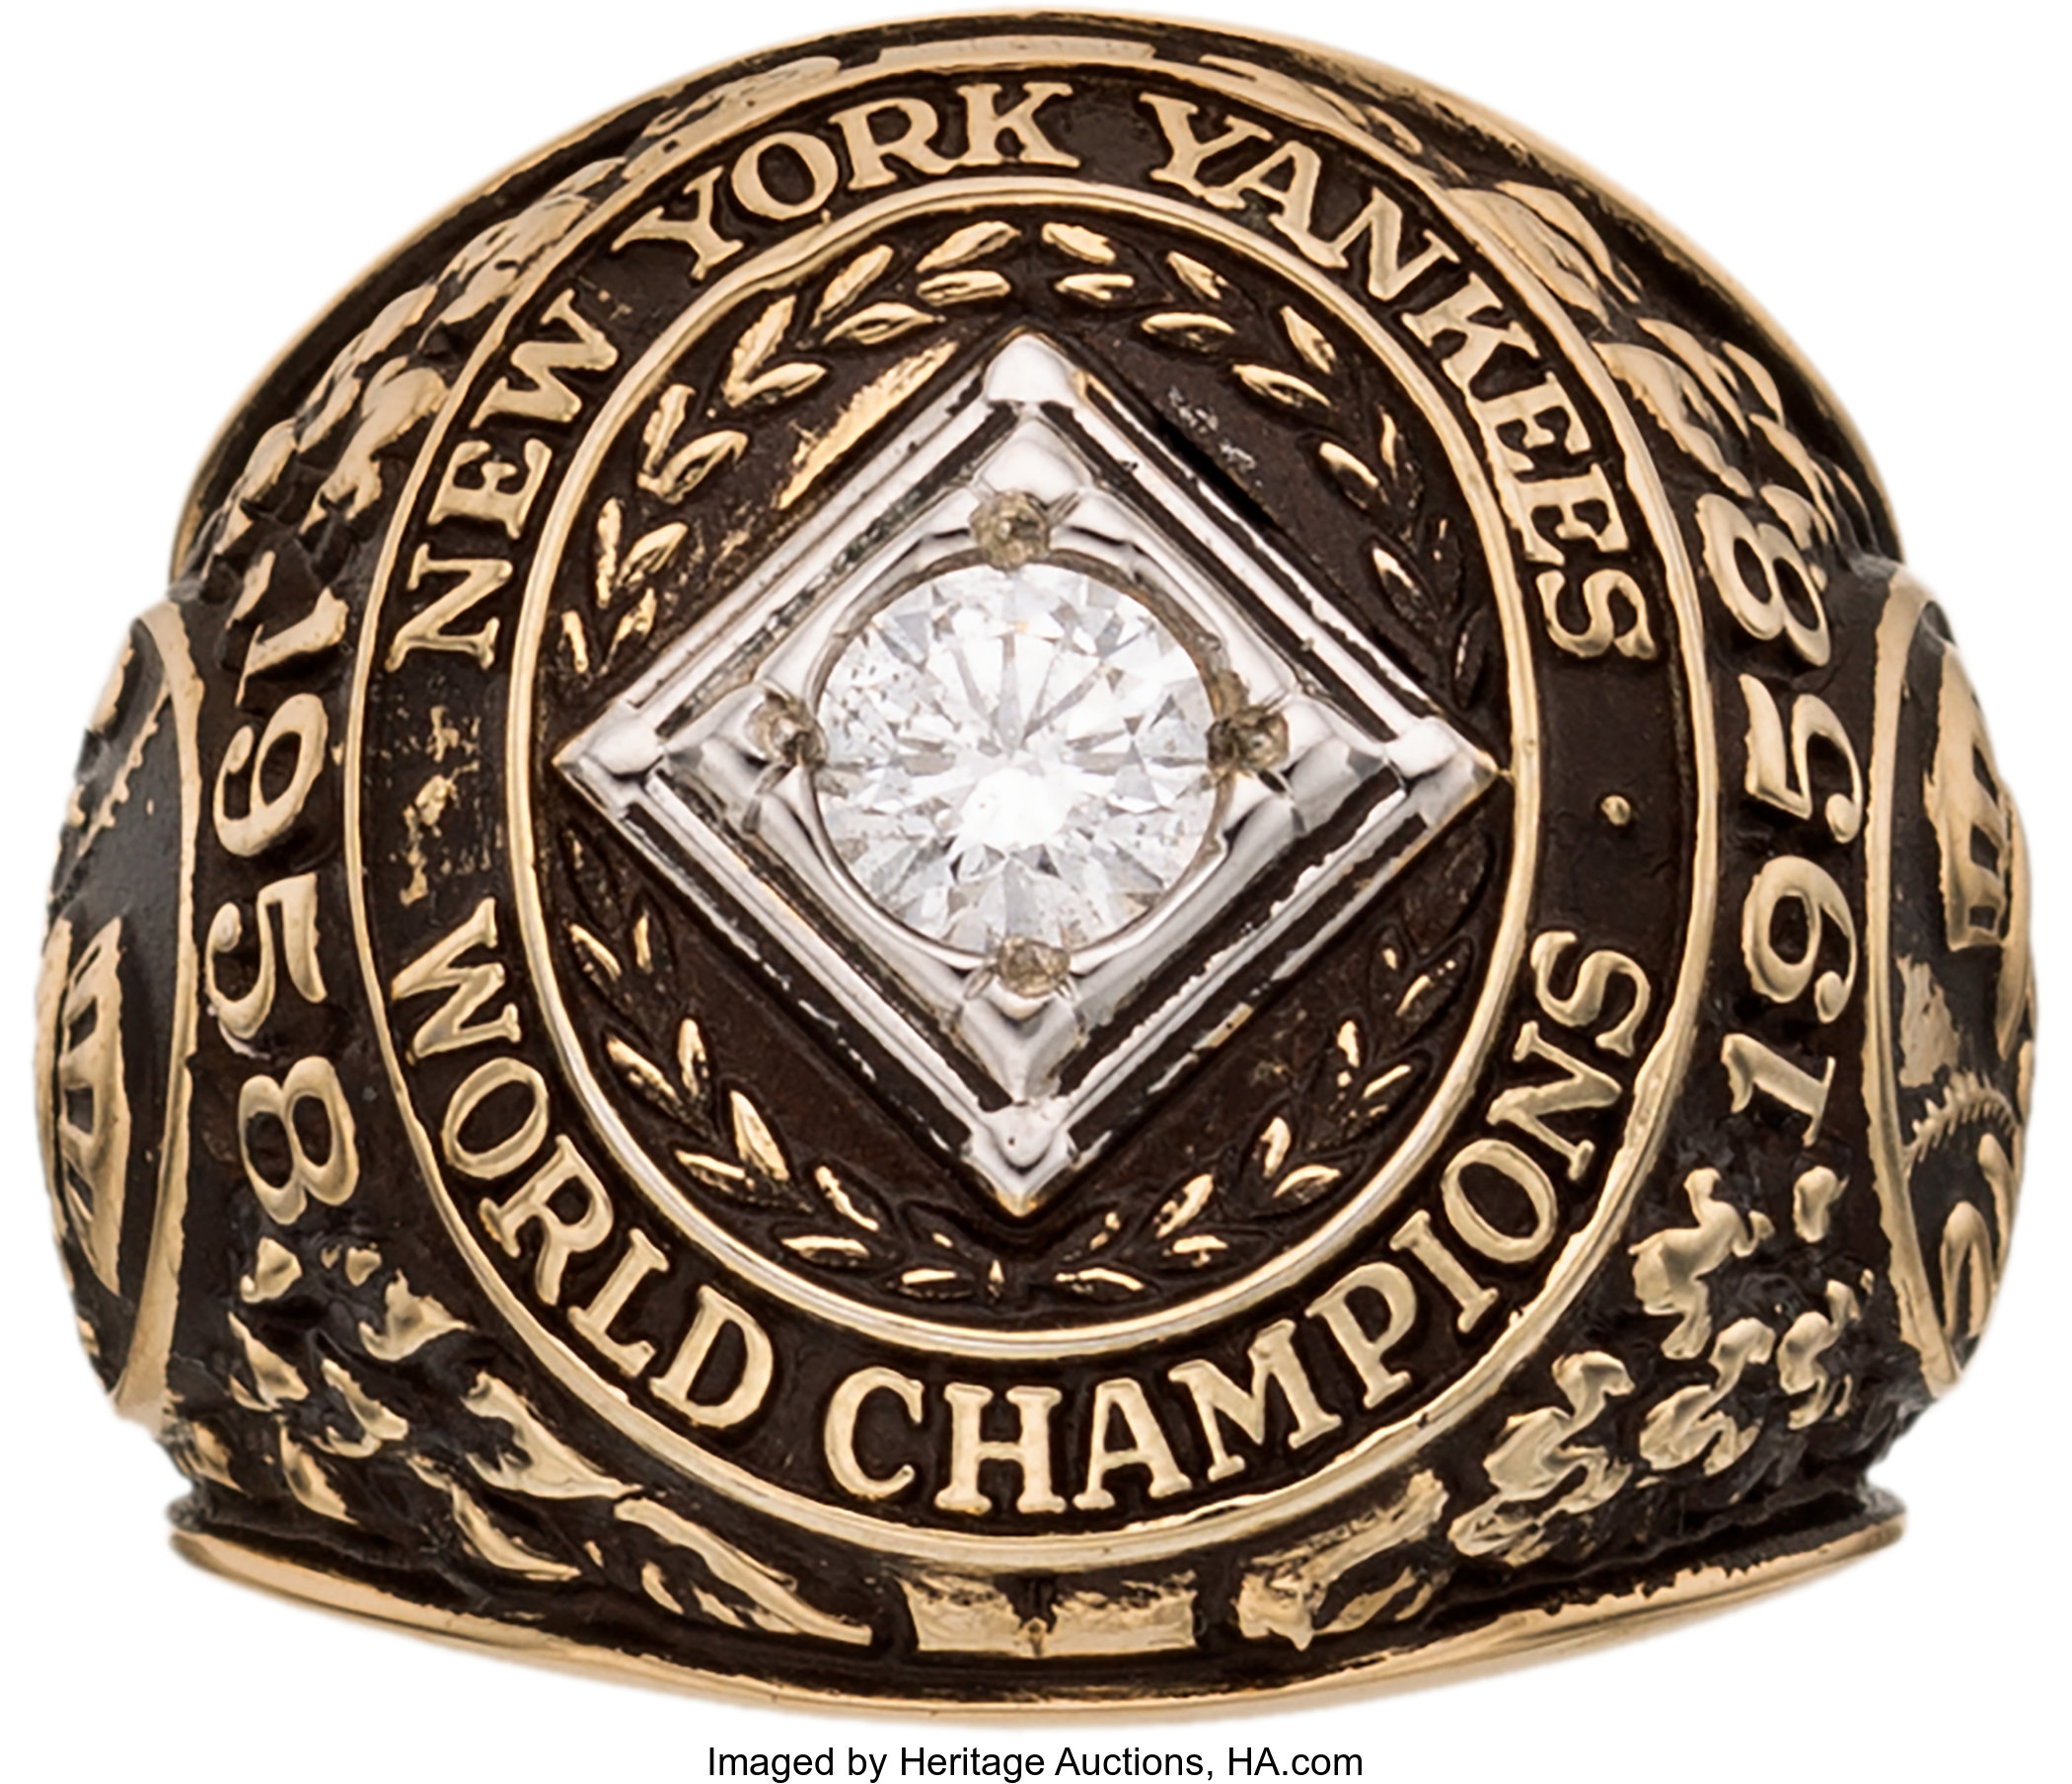 1958 New York Yankees World Series Championship Ring - www